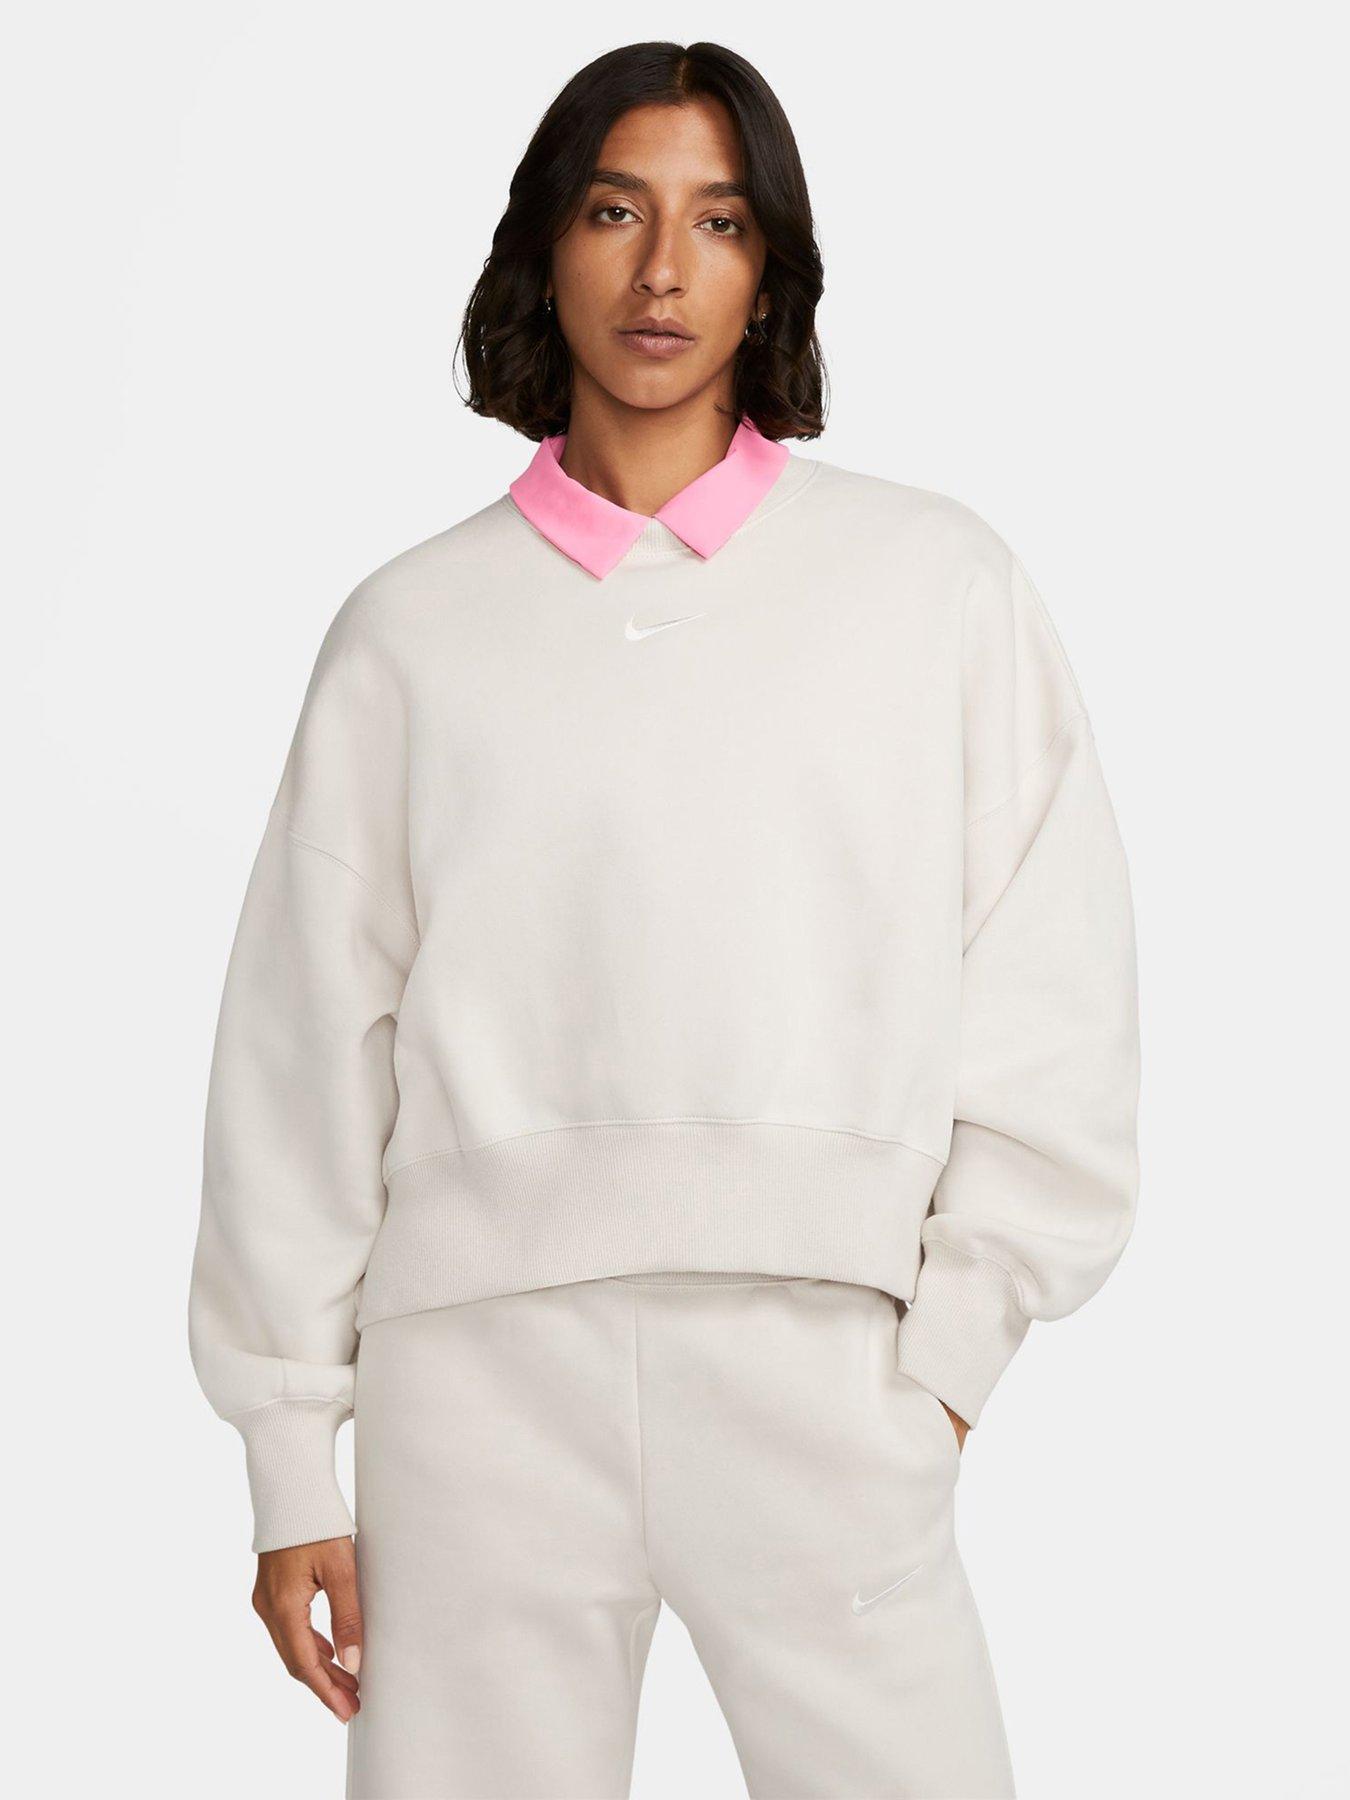 Nike Phoenix Fleece hoodie in pink